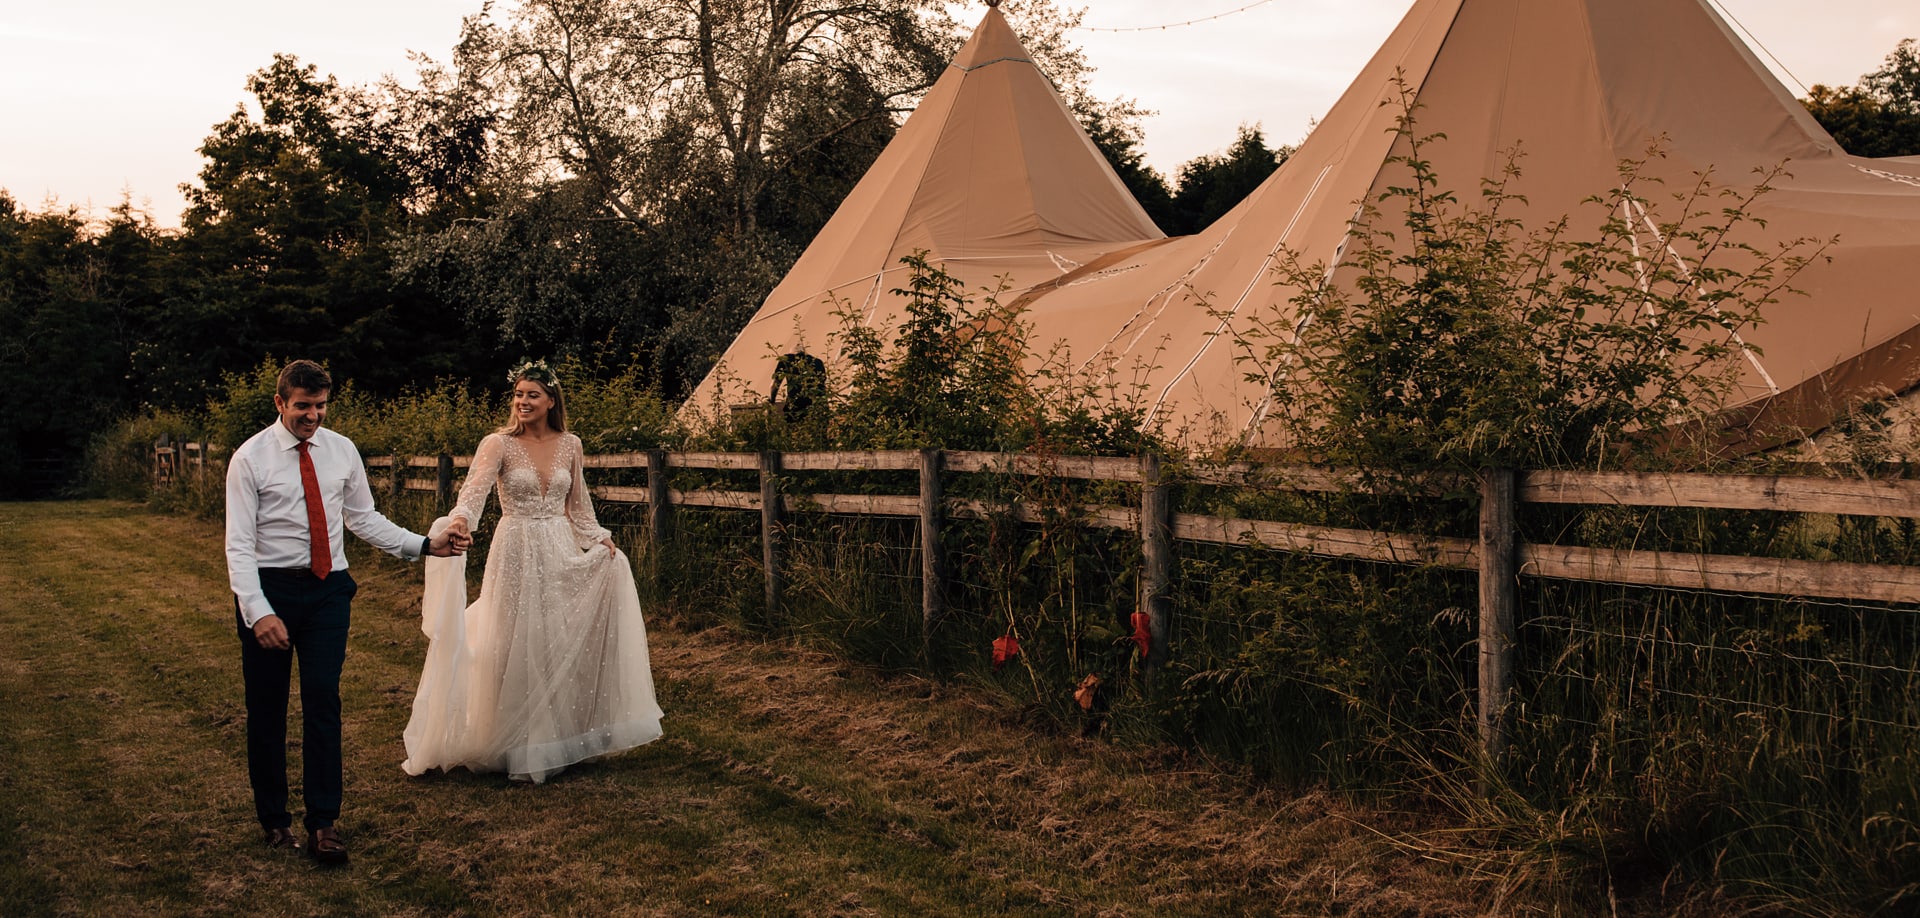 Festival style tipi wedding photography – Back garden